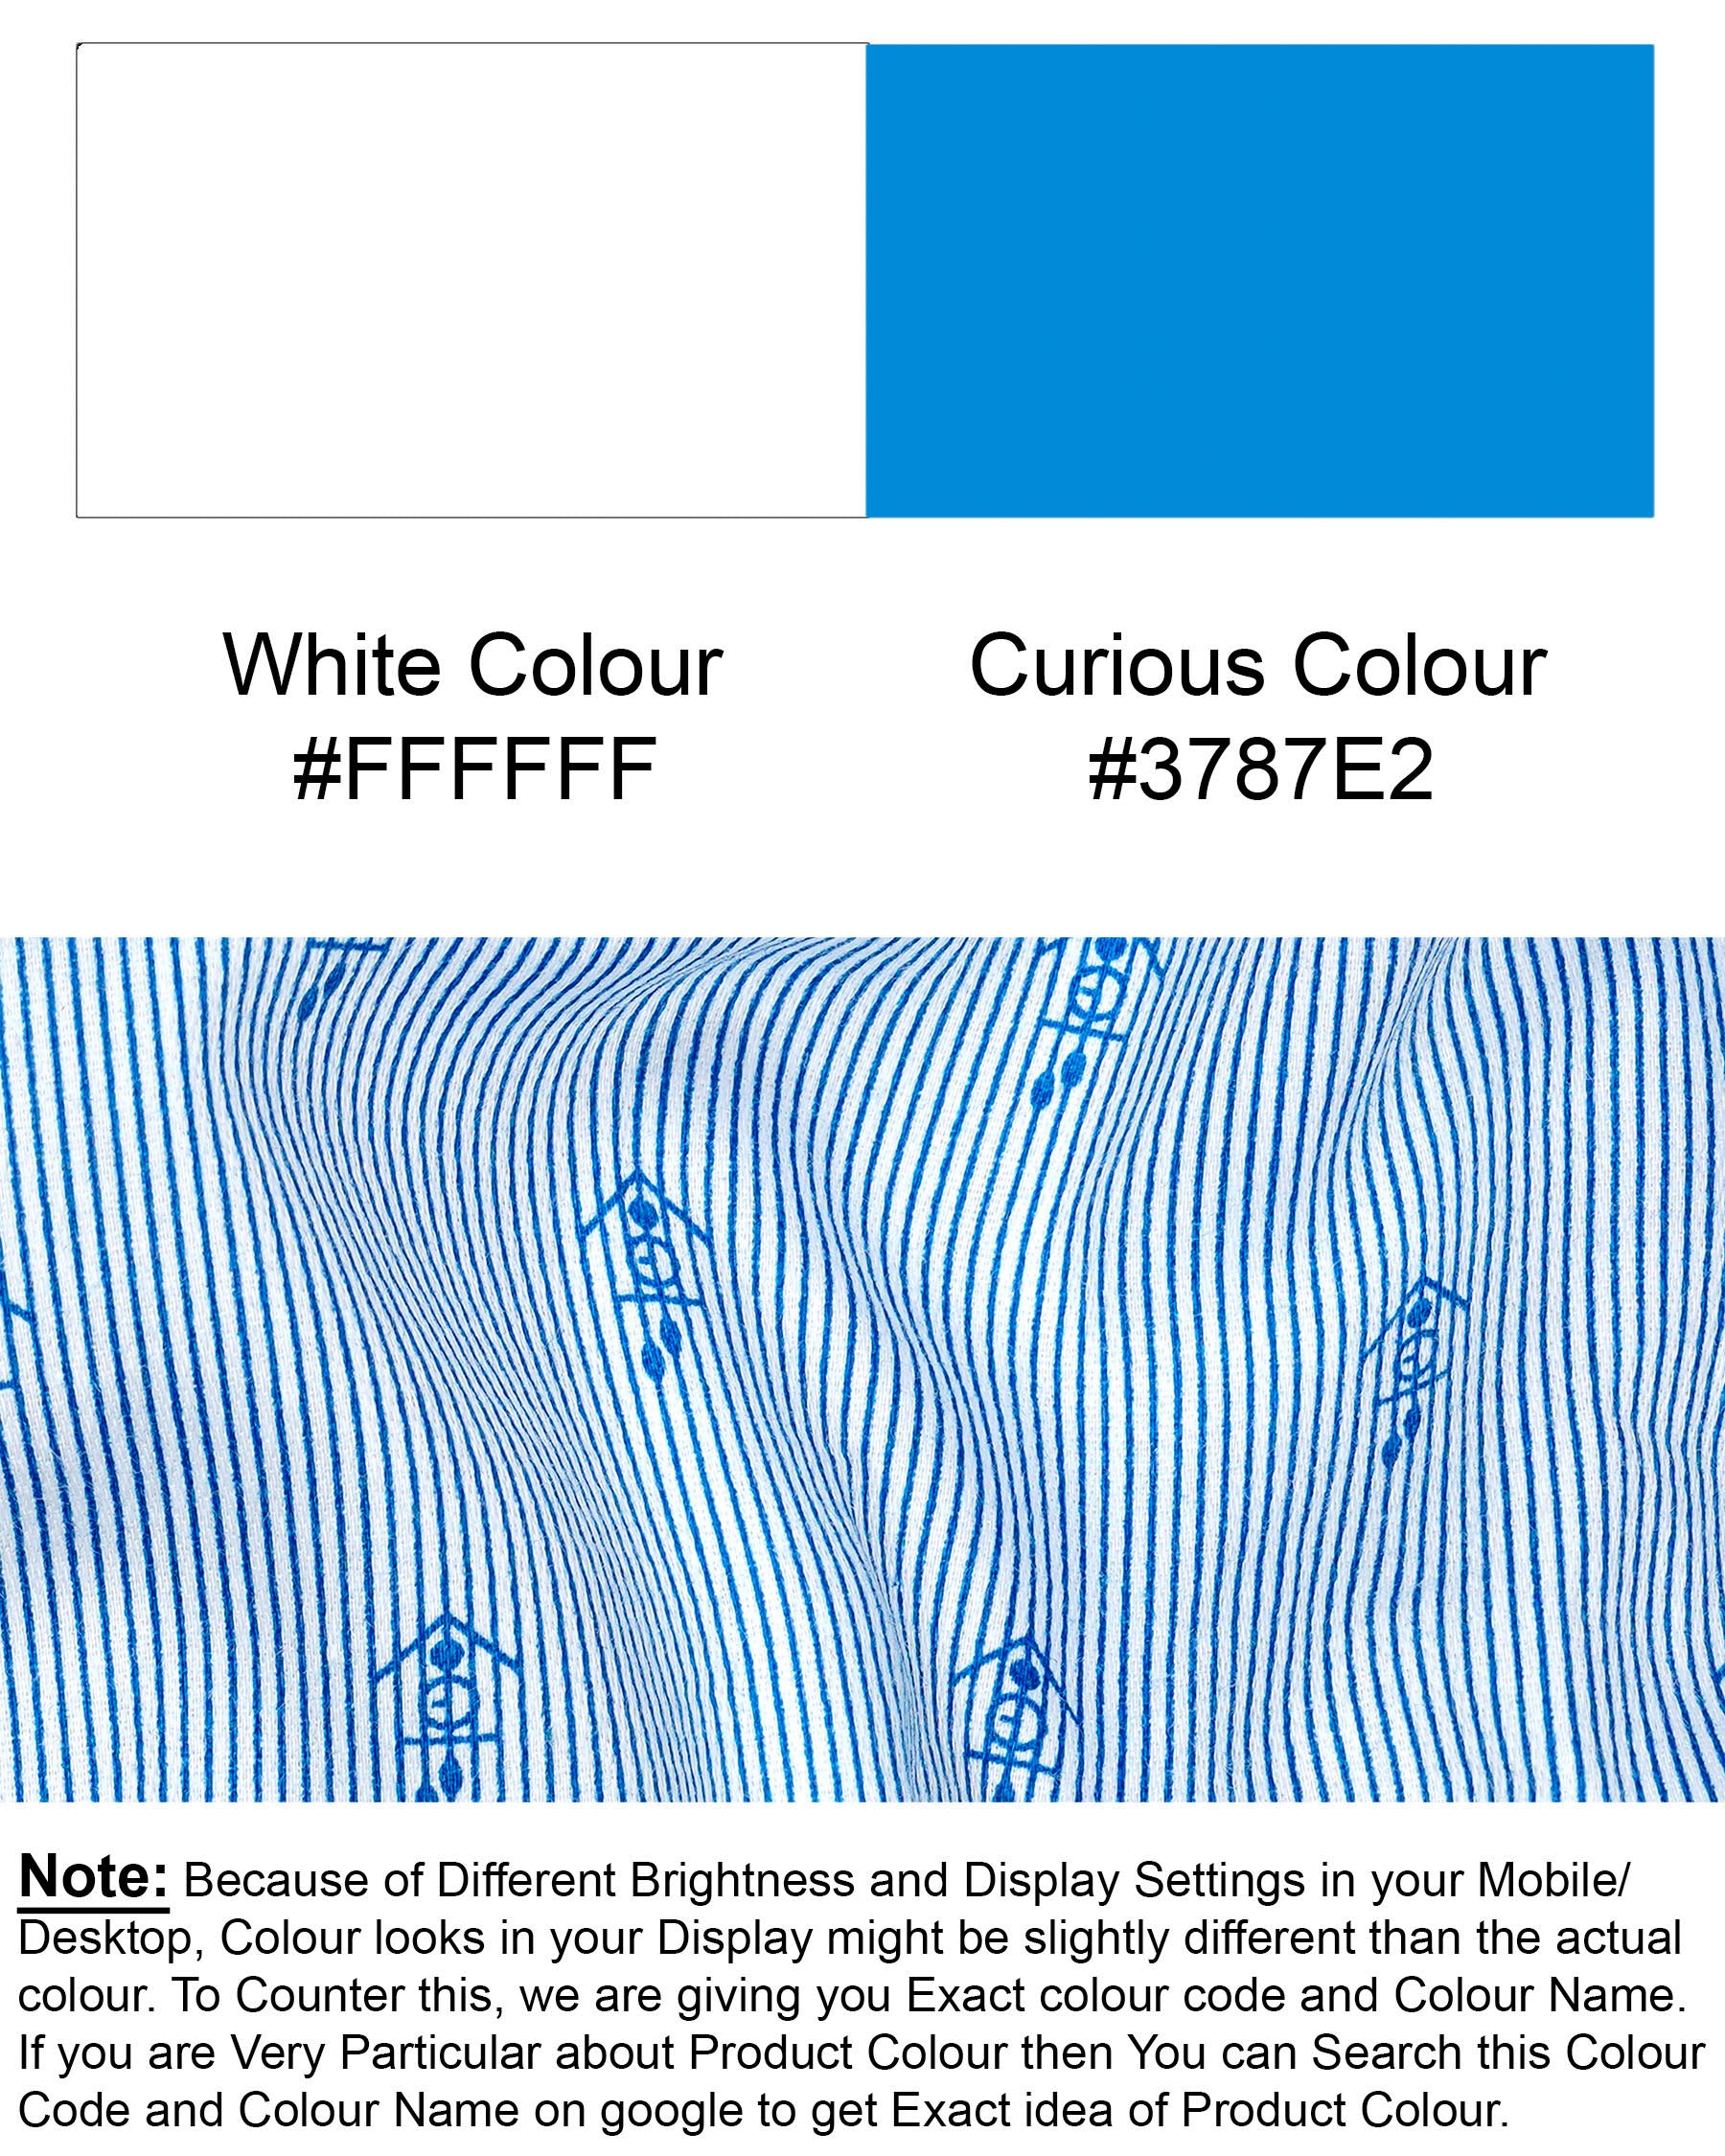 Curious Blue Striped and Anchor Printed Super Soft Premium Cotton Shirt 7622-BLE-38,7622-BLE-38,7622-BLE-39,7622-BLE-39,7622-BLE-40,7622-BLE-40,7622-BLE-42,7622-BLE-42,7622-BLE-44,7622-BLE-44,7622-BLE-46,7622-BLE-46,7622-BLE-48,7622-BLE-48,7622-BLE-50,7622-BLE-50,7622-BLE-52,7622-BLE-52